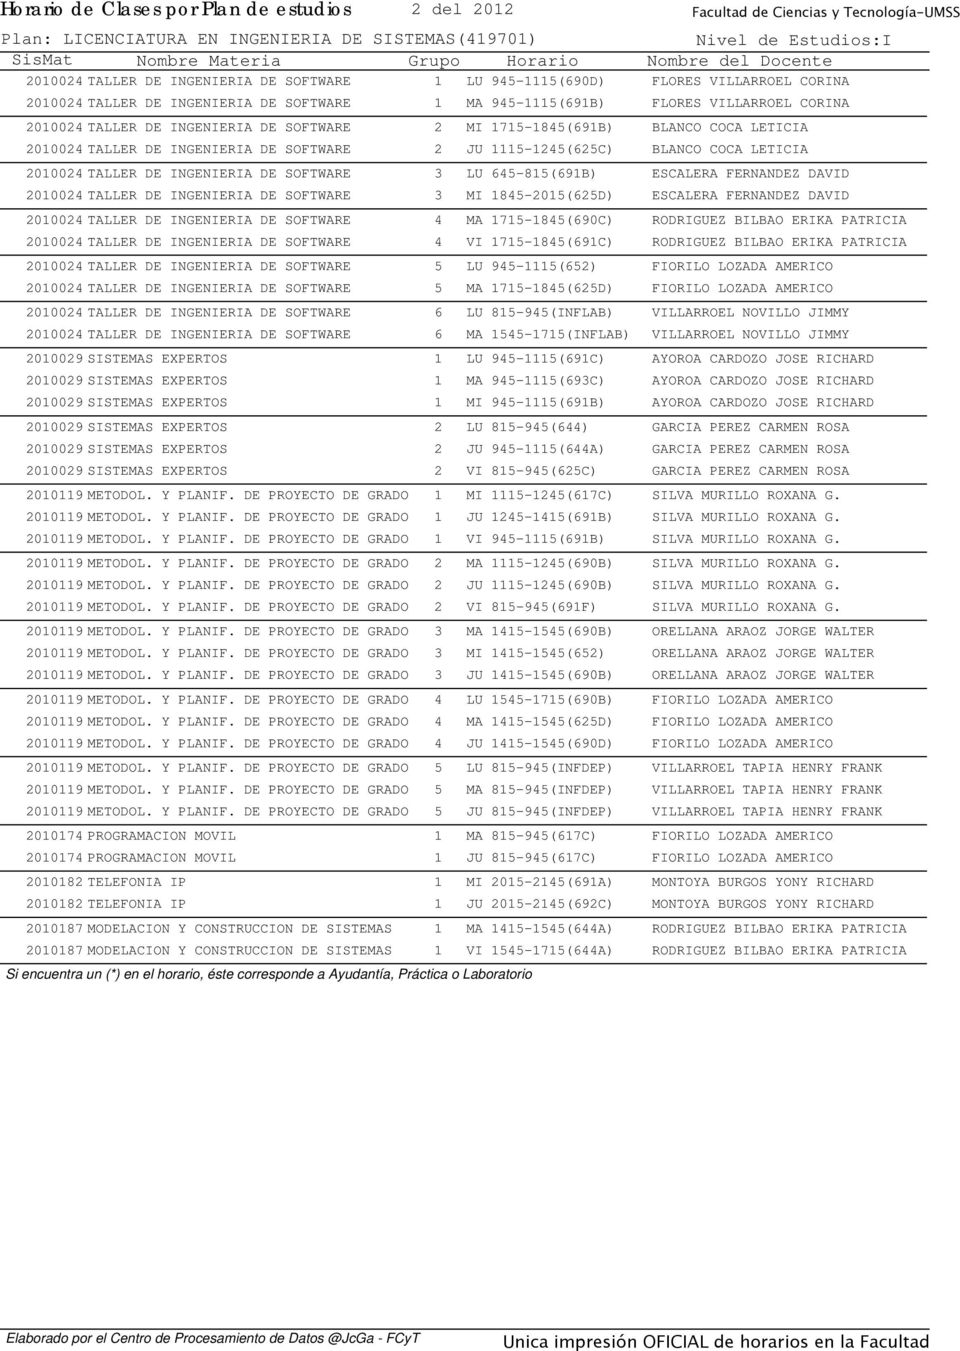 SOFTWARE 3 LU 645-815(691B) ESCALERA FERNANDEZ DAVID 2010024 TALLER DE INGENIERIA DE SOFTWARE 3 MI 1845-2015(625D) ESCALERA FERNANDEZ DAVID 2010024 TALLER DE INGENIERIA DE SOFTWARE 4 MA